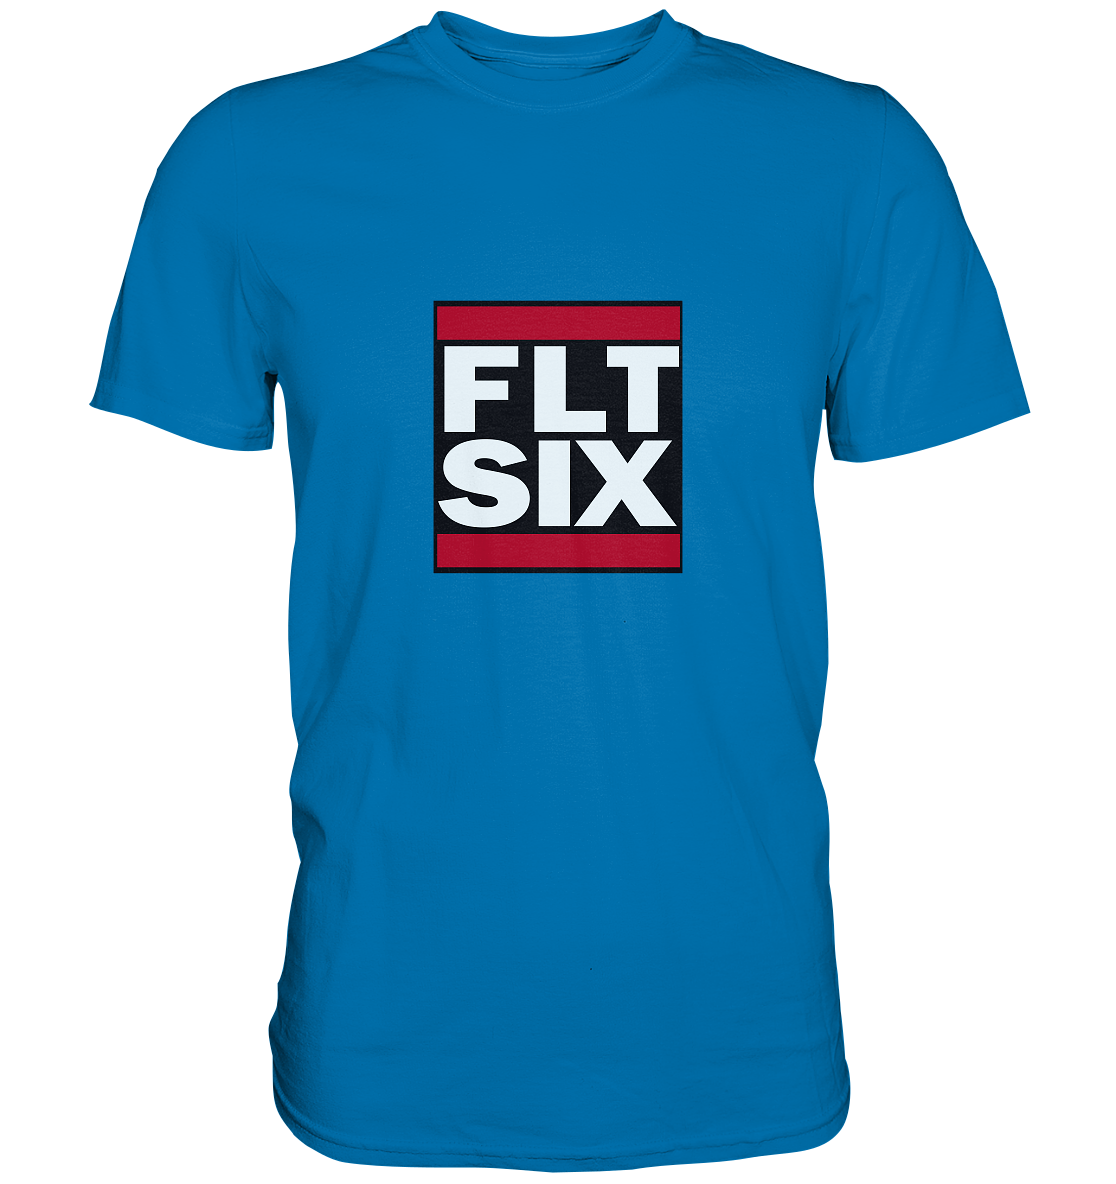 FLT SIX  - Premium Shirt